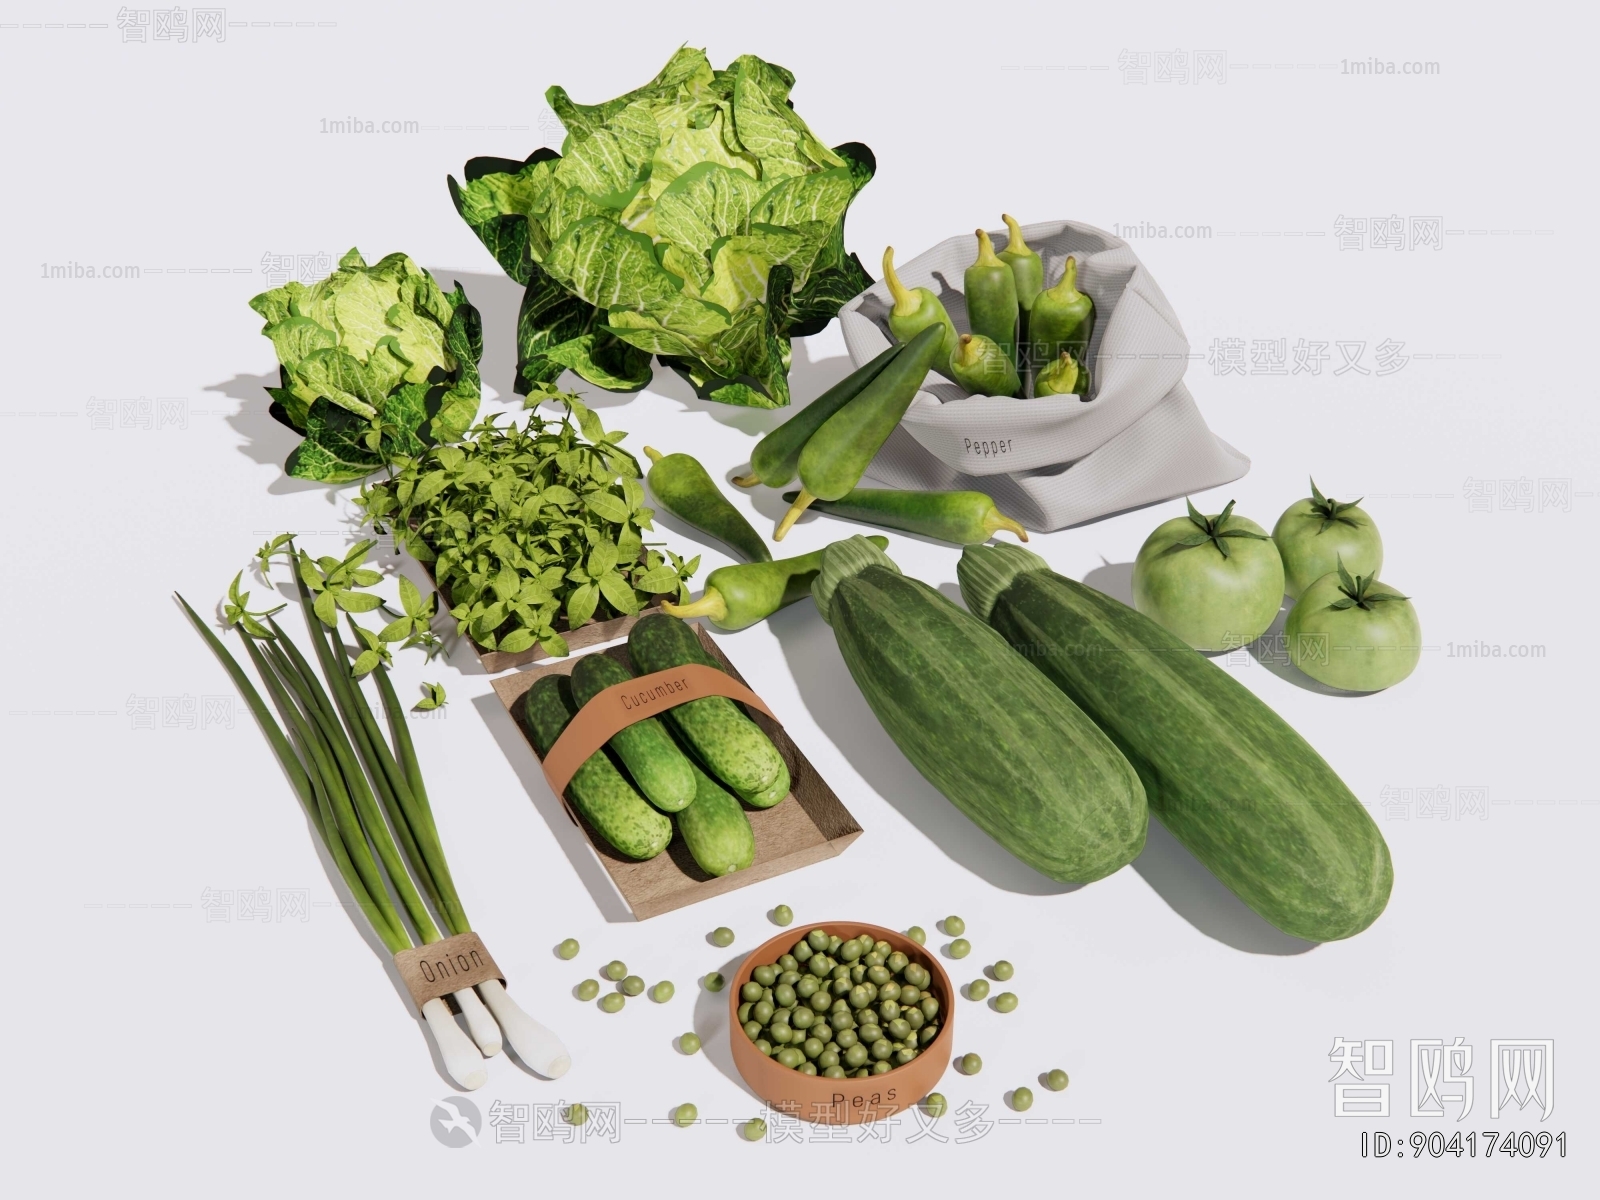 Modern Vegetables